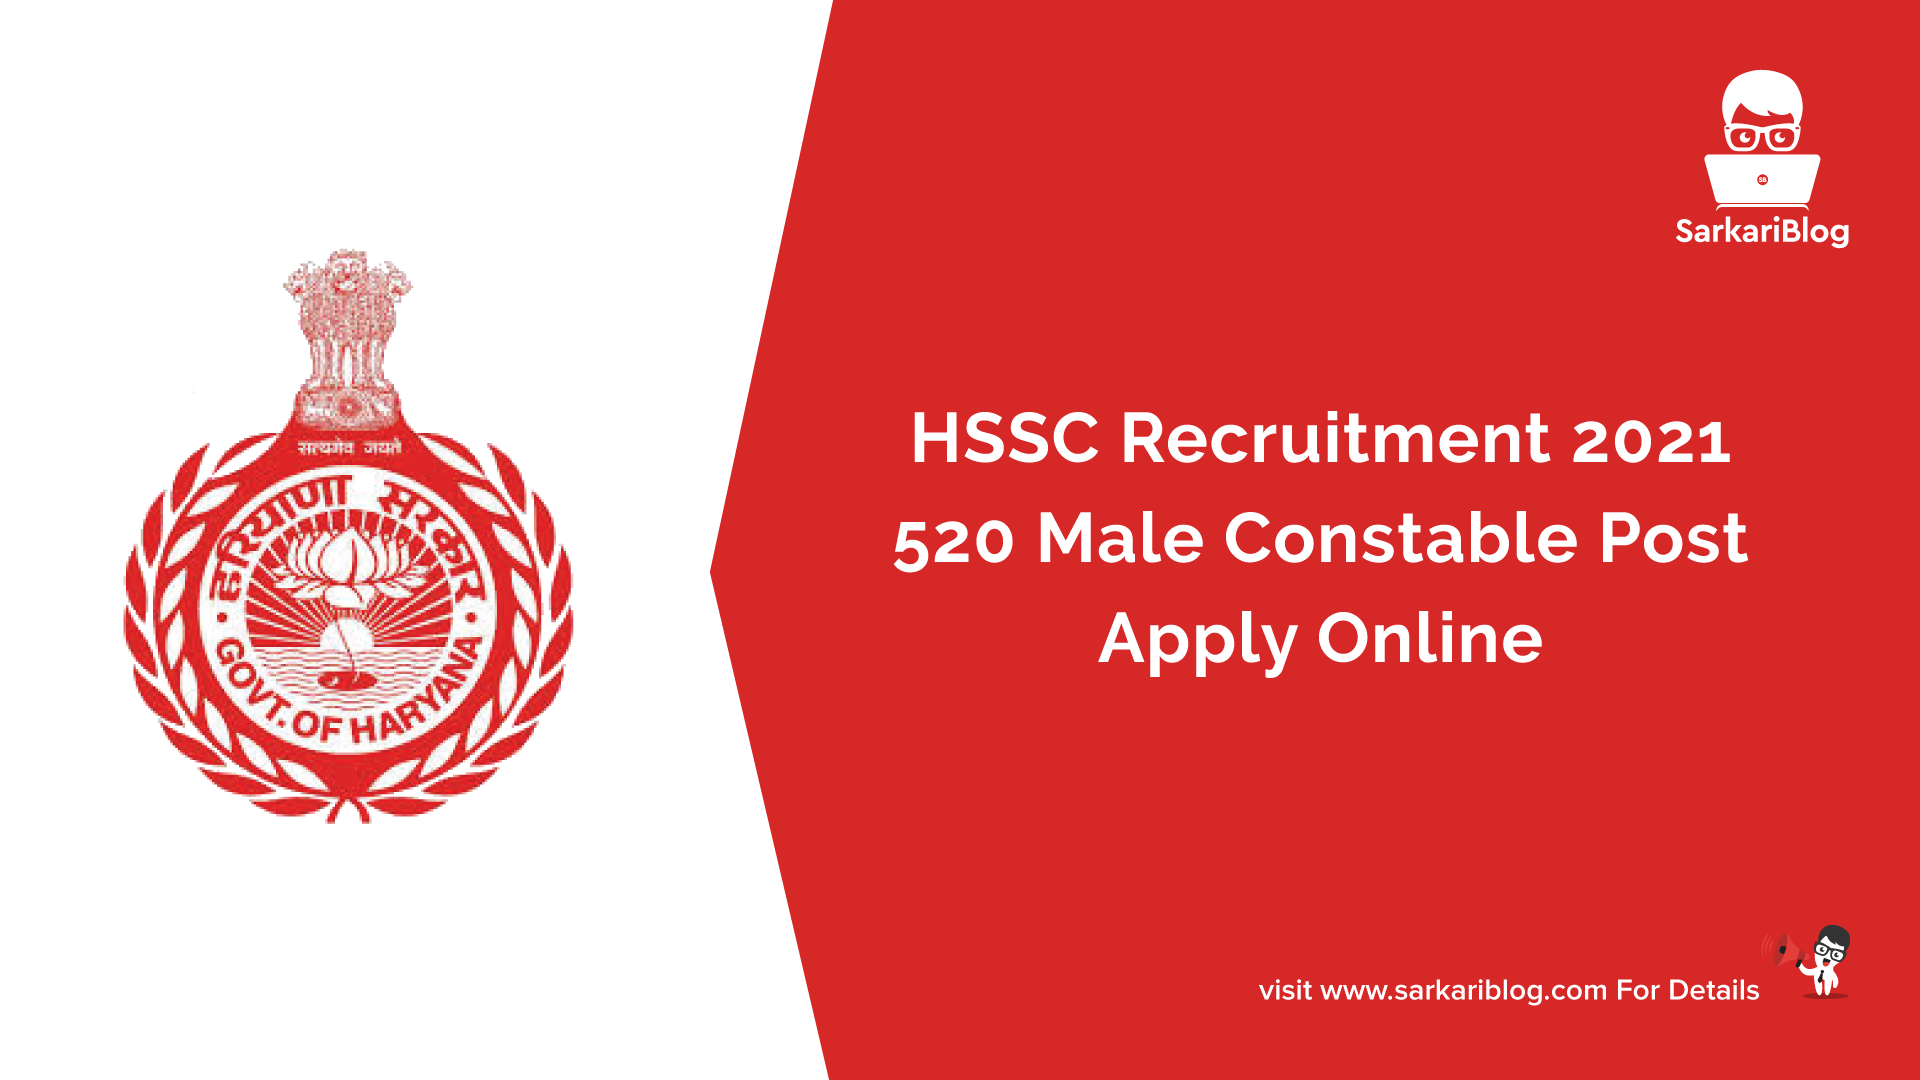 HSSC Recruitment 2021 - 520 Male Constable Post, Apply Online